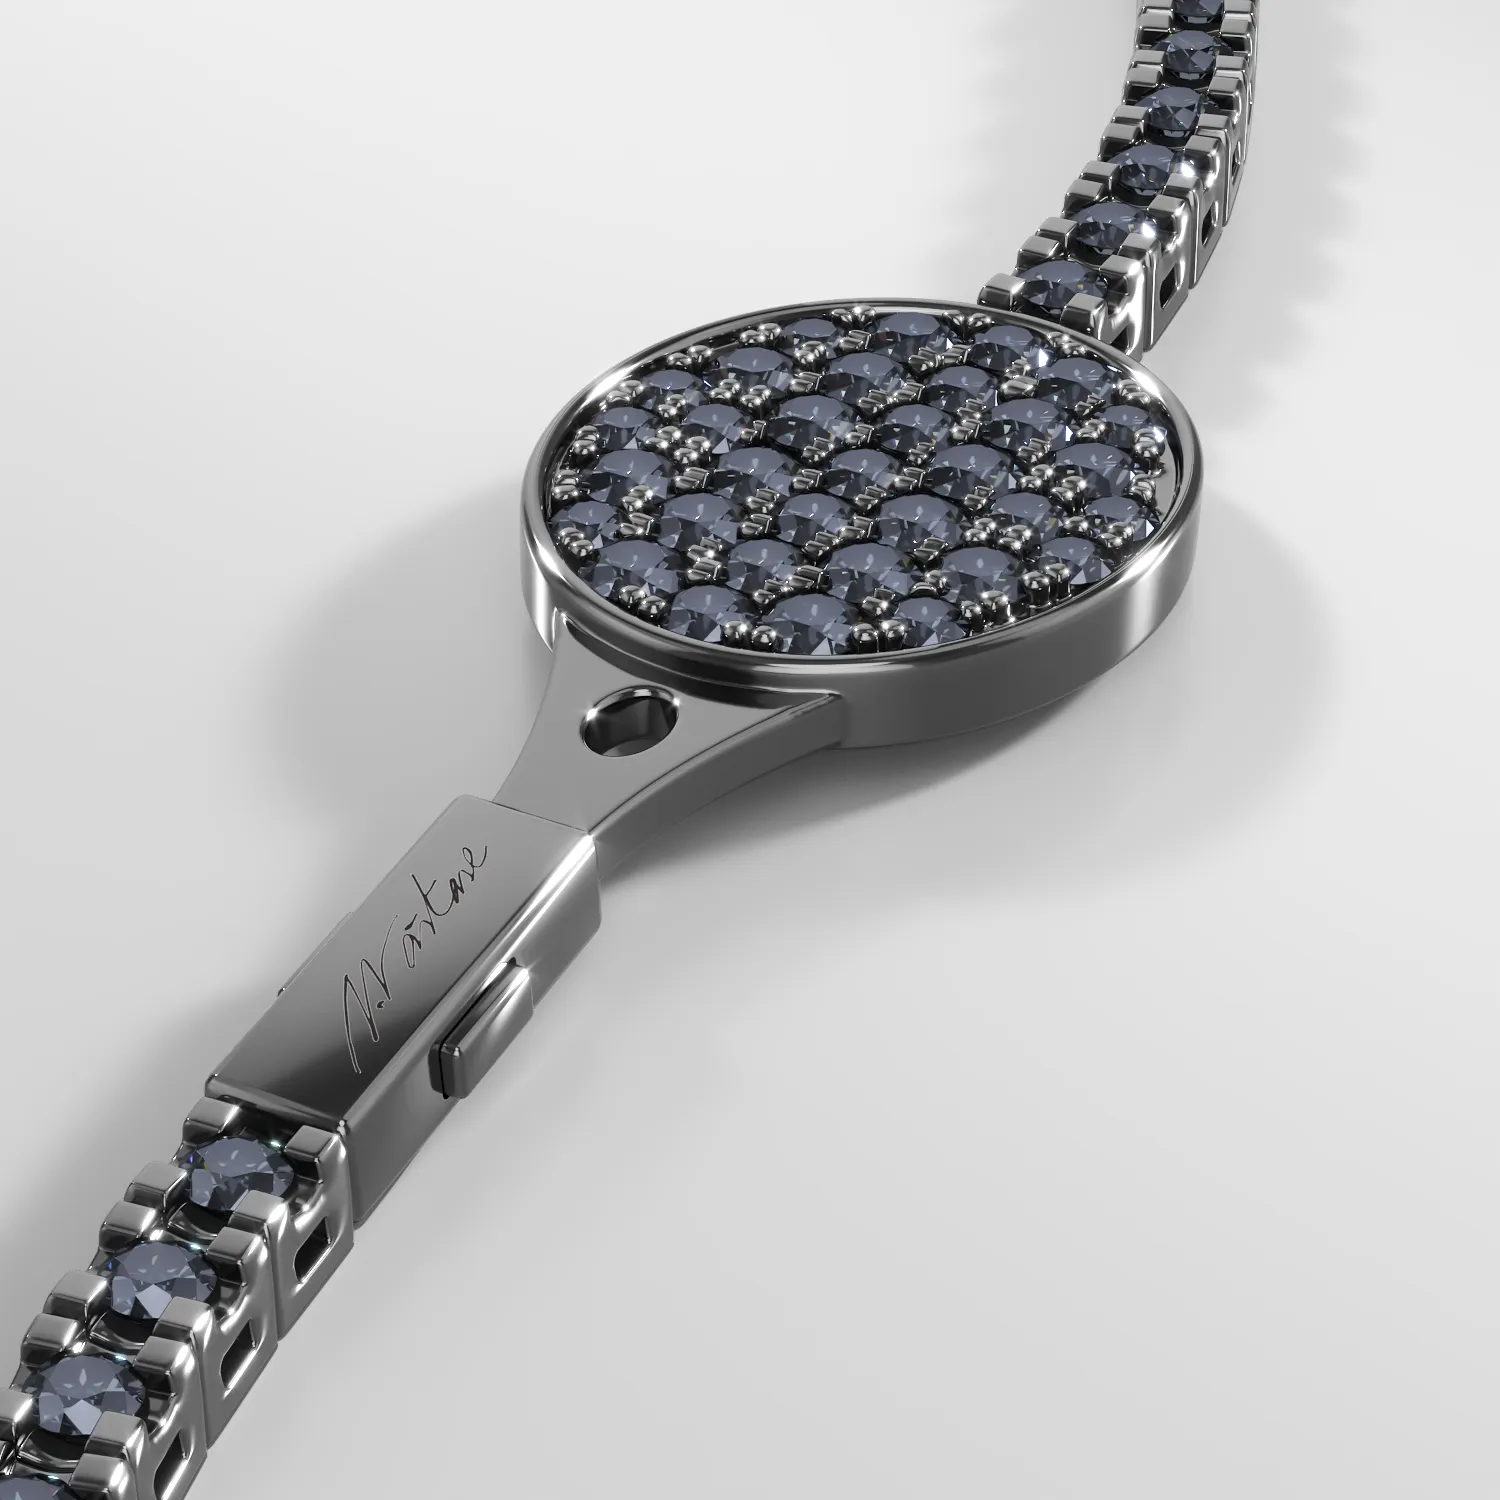 Heritage tennis bracelet with 1.796ct black sapphires